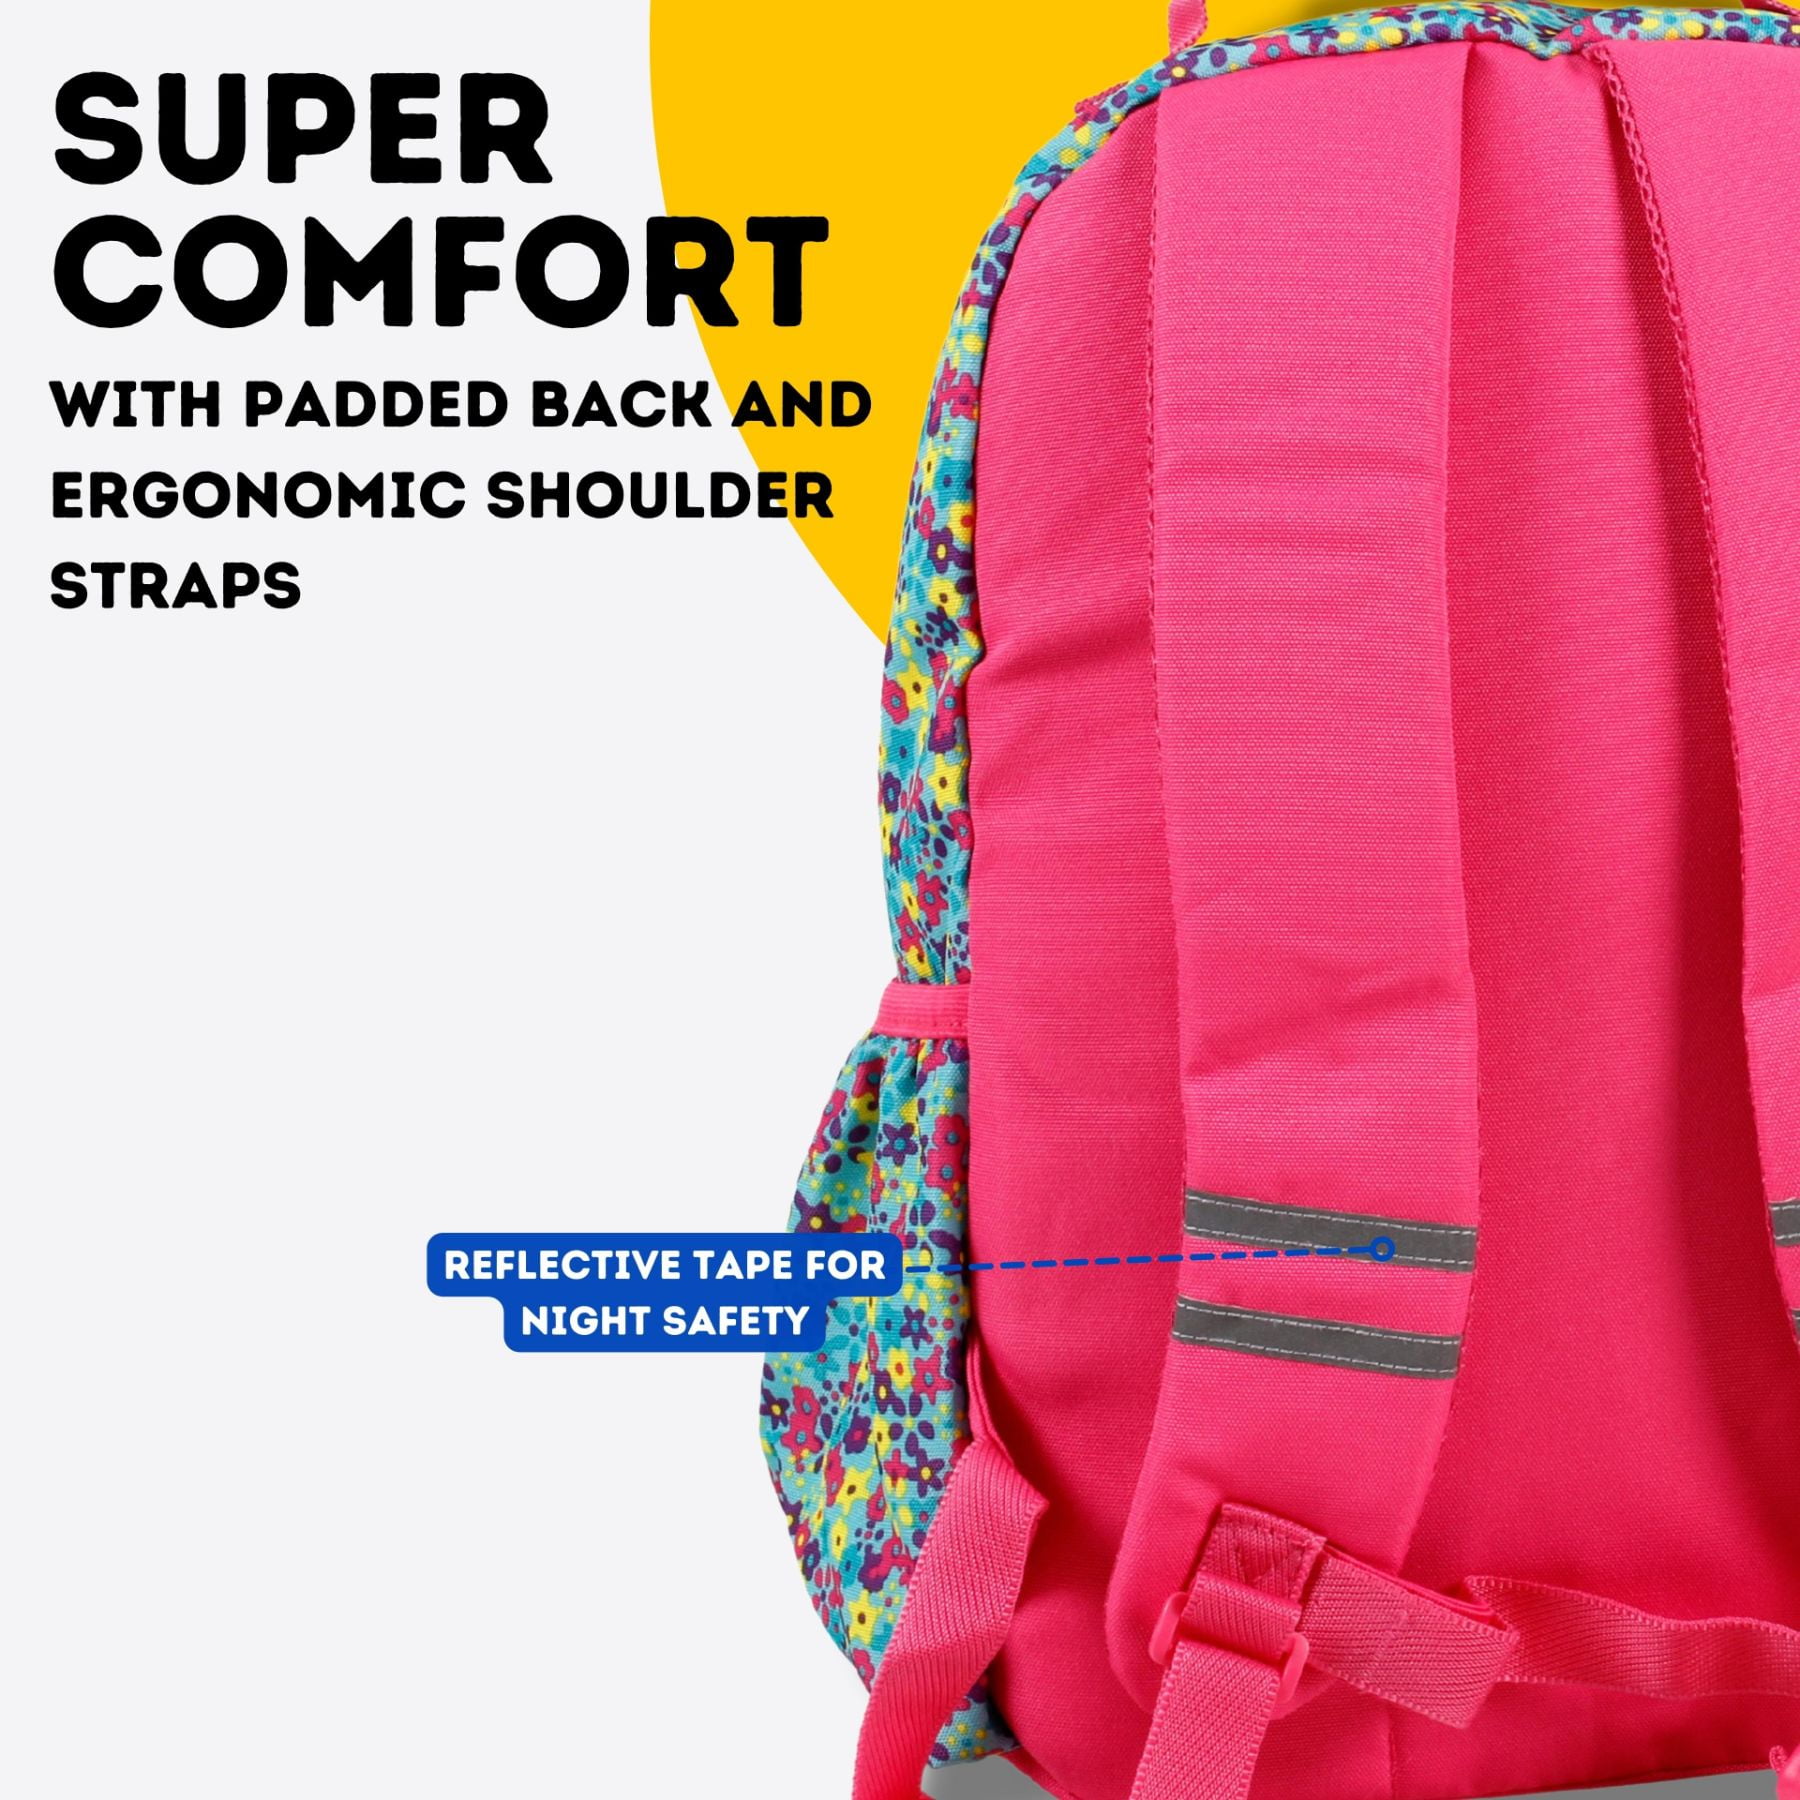 DWONDFORT Fashion Backpack Combination with Lunch Bag Pencil Bag Travel Schoolbag (BACKPACK-2)